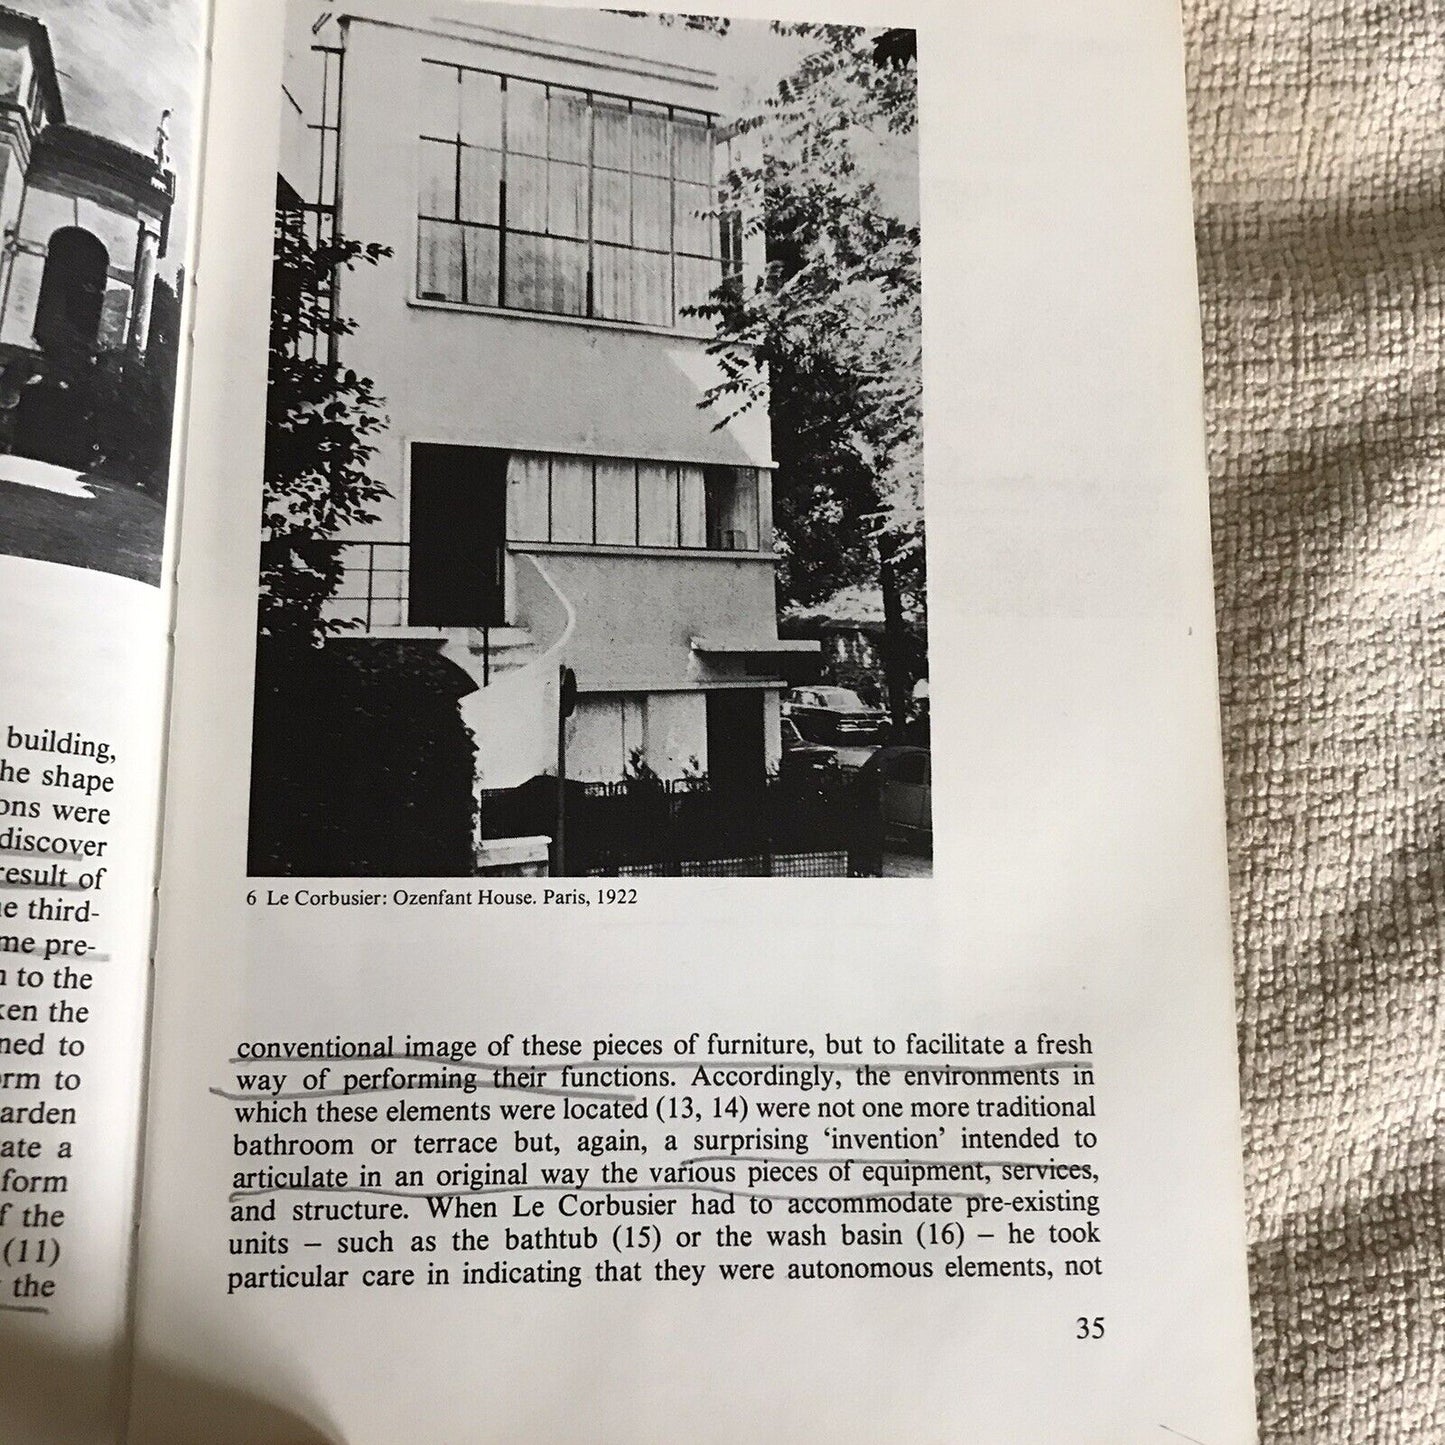 1979*1st* Architecture & It’s Interpretation - Juan Pablo Bonta(Lund Humphries)